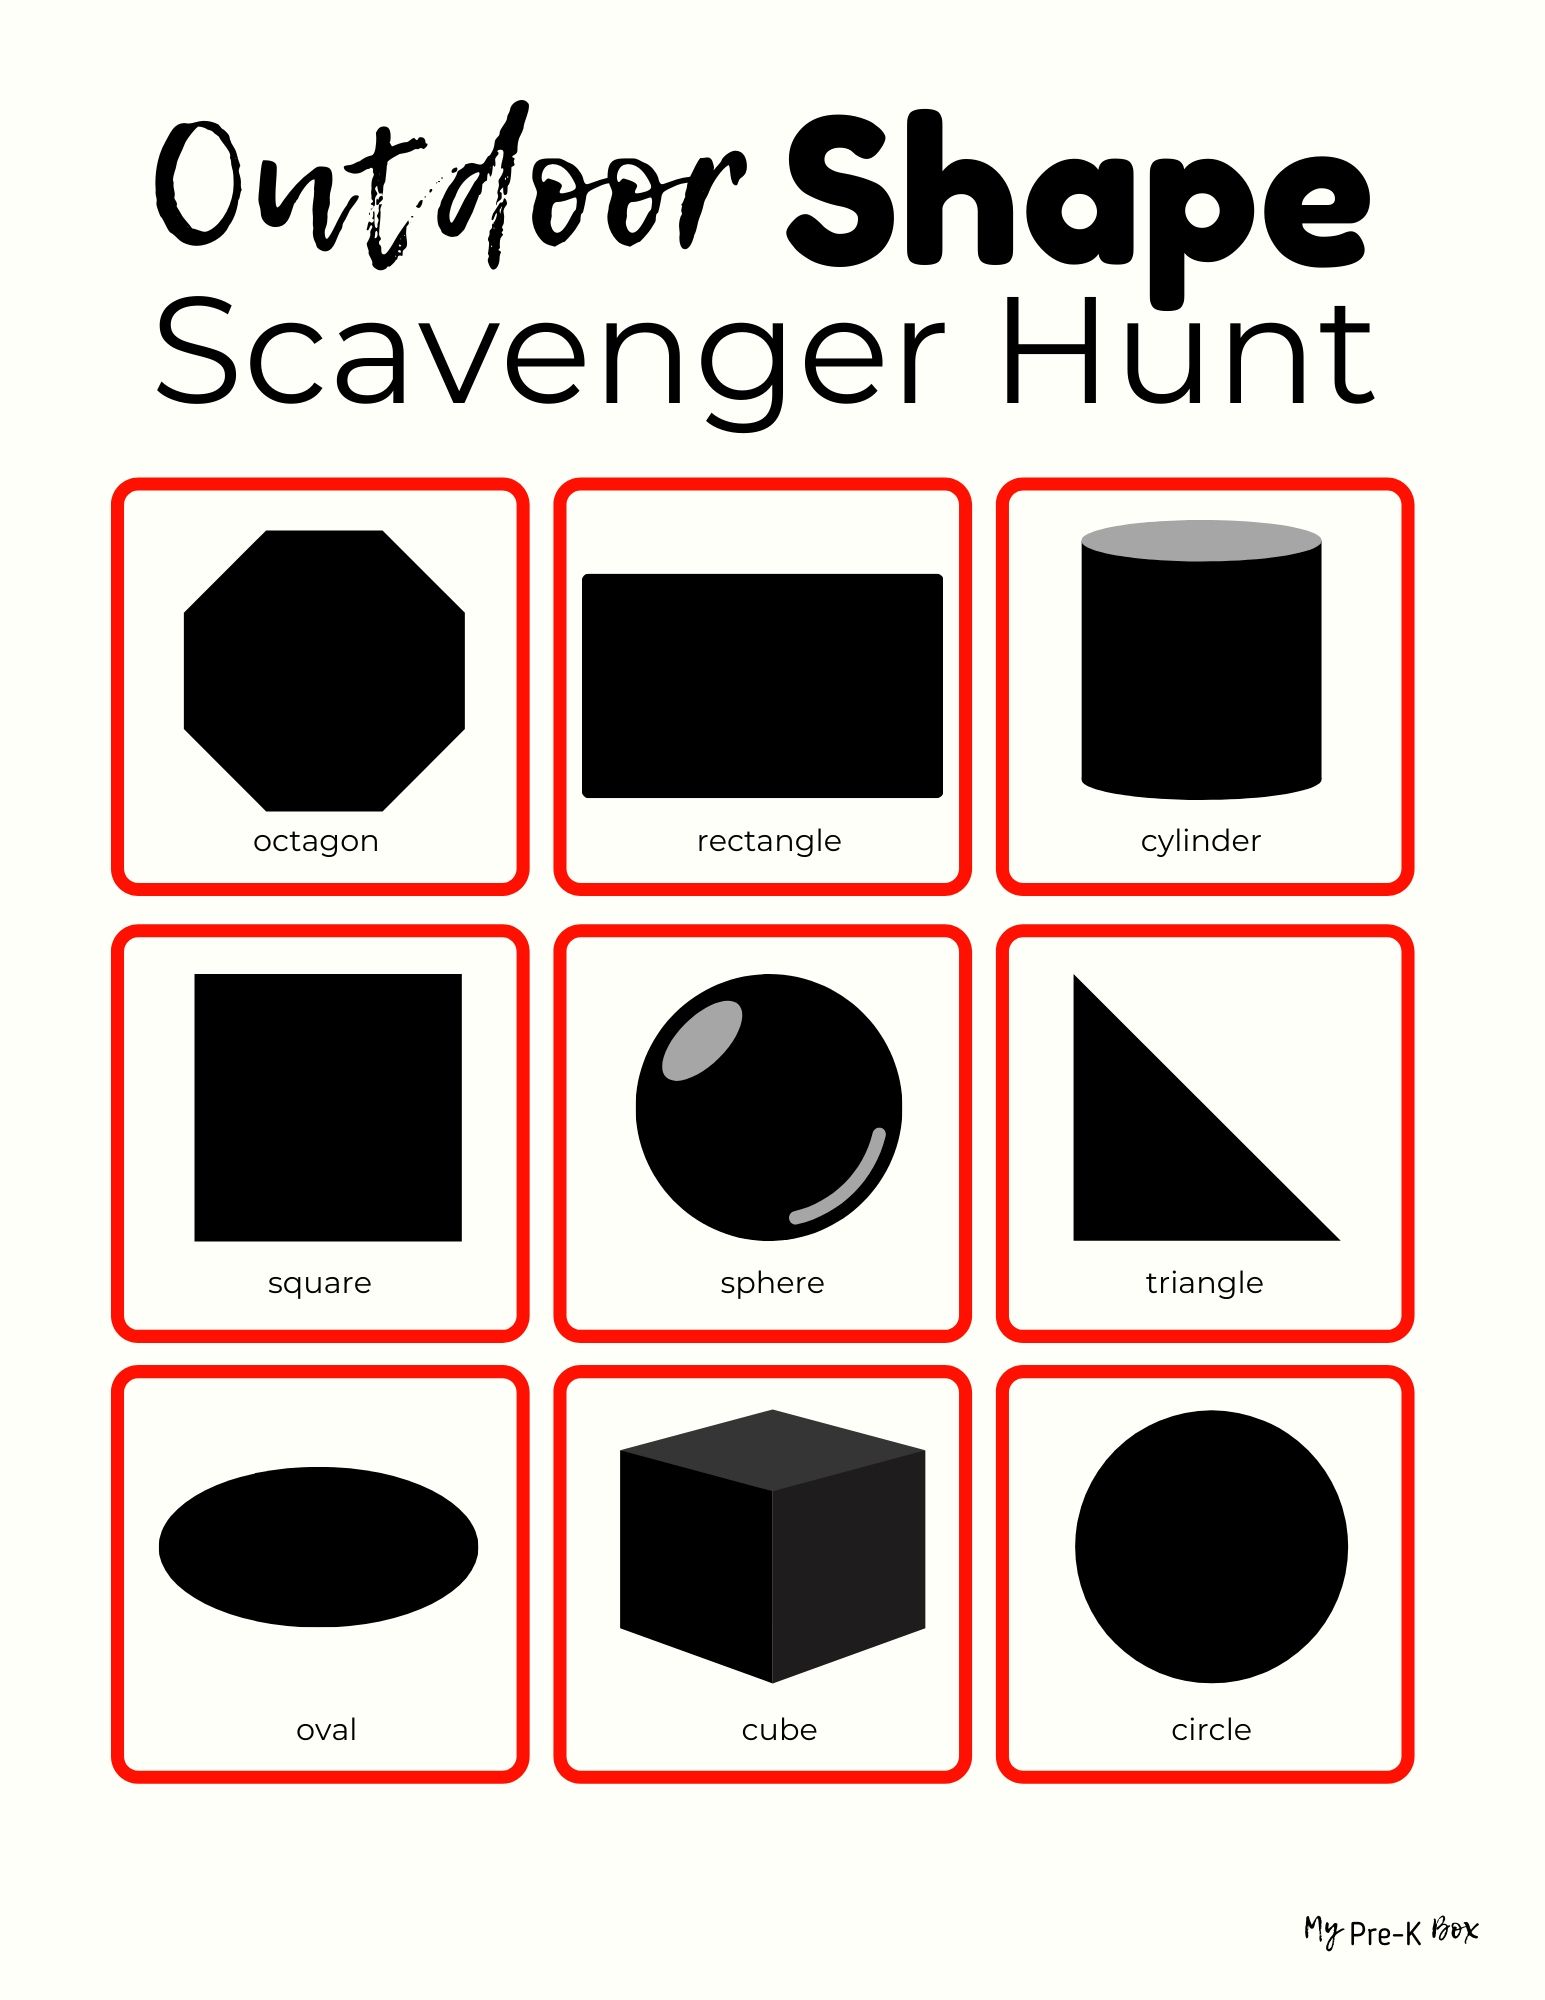 1569-my-pre-k-box-shape-scavenger-hunt-board.jpg